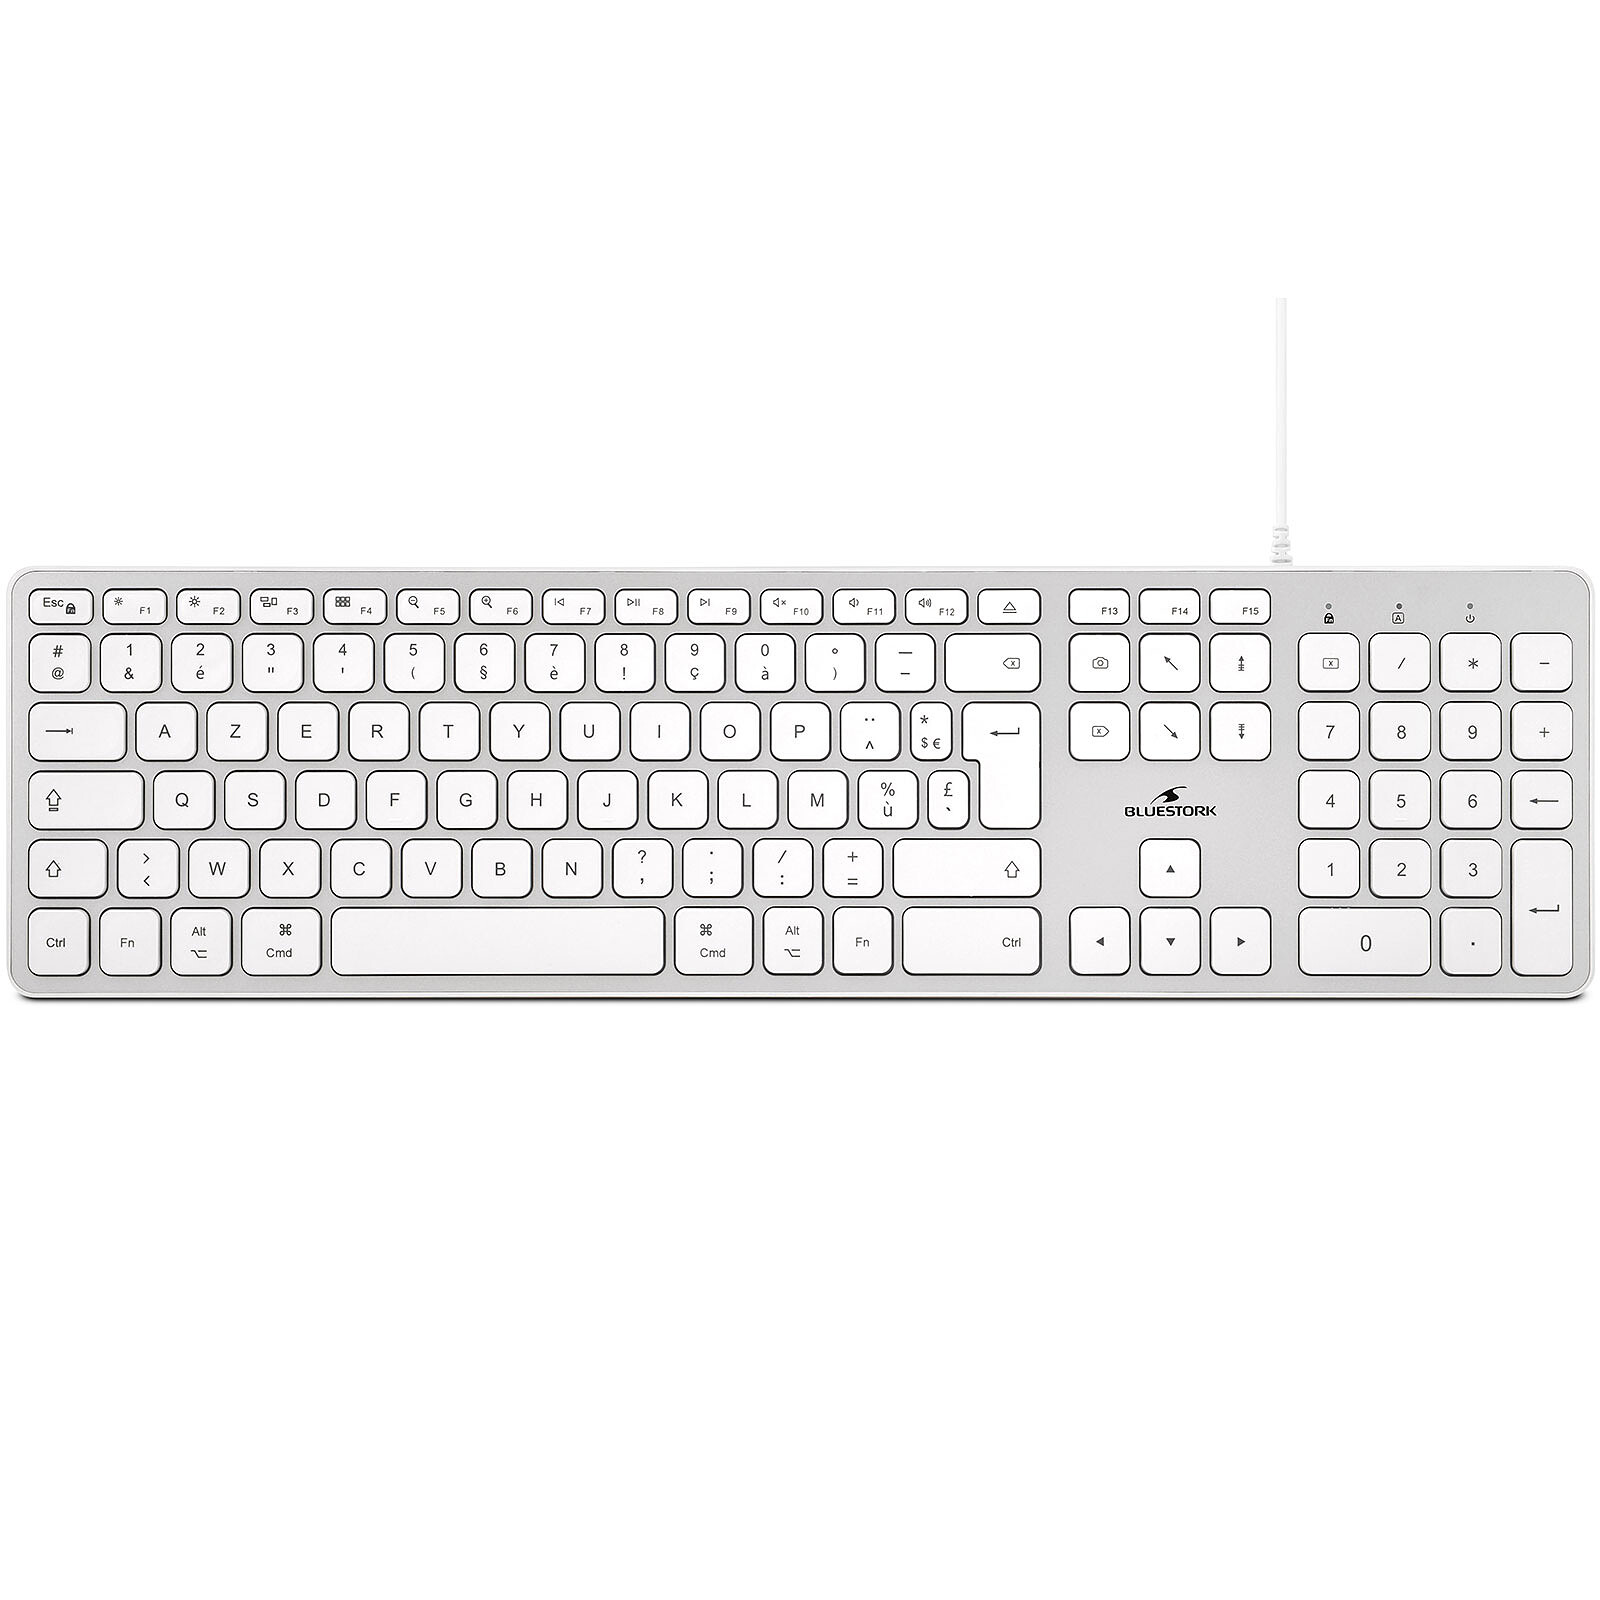 Magic Keyboard - Français - Apple (FR)